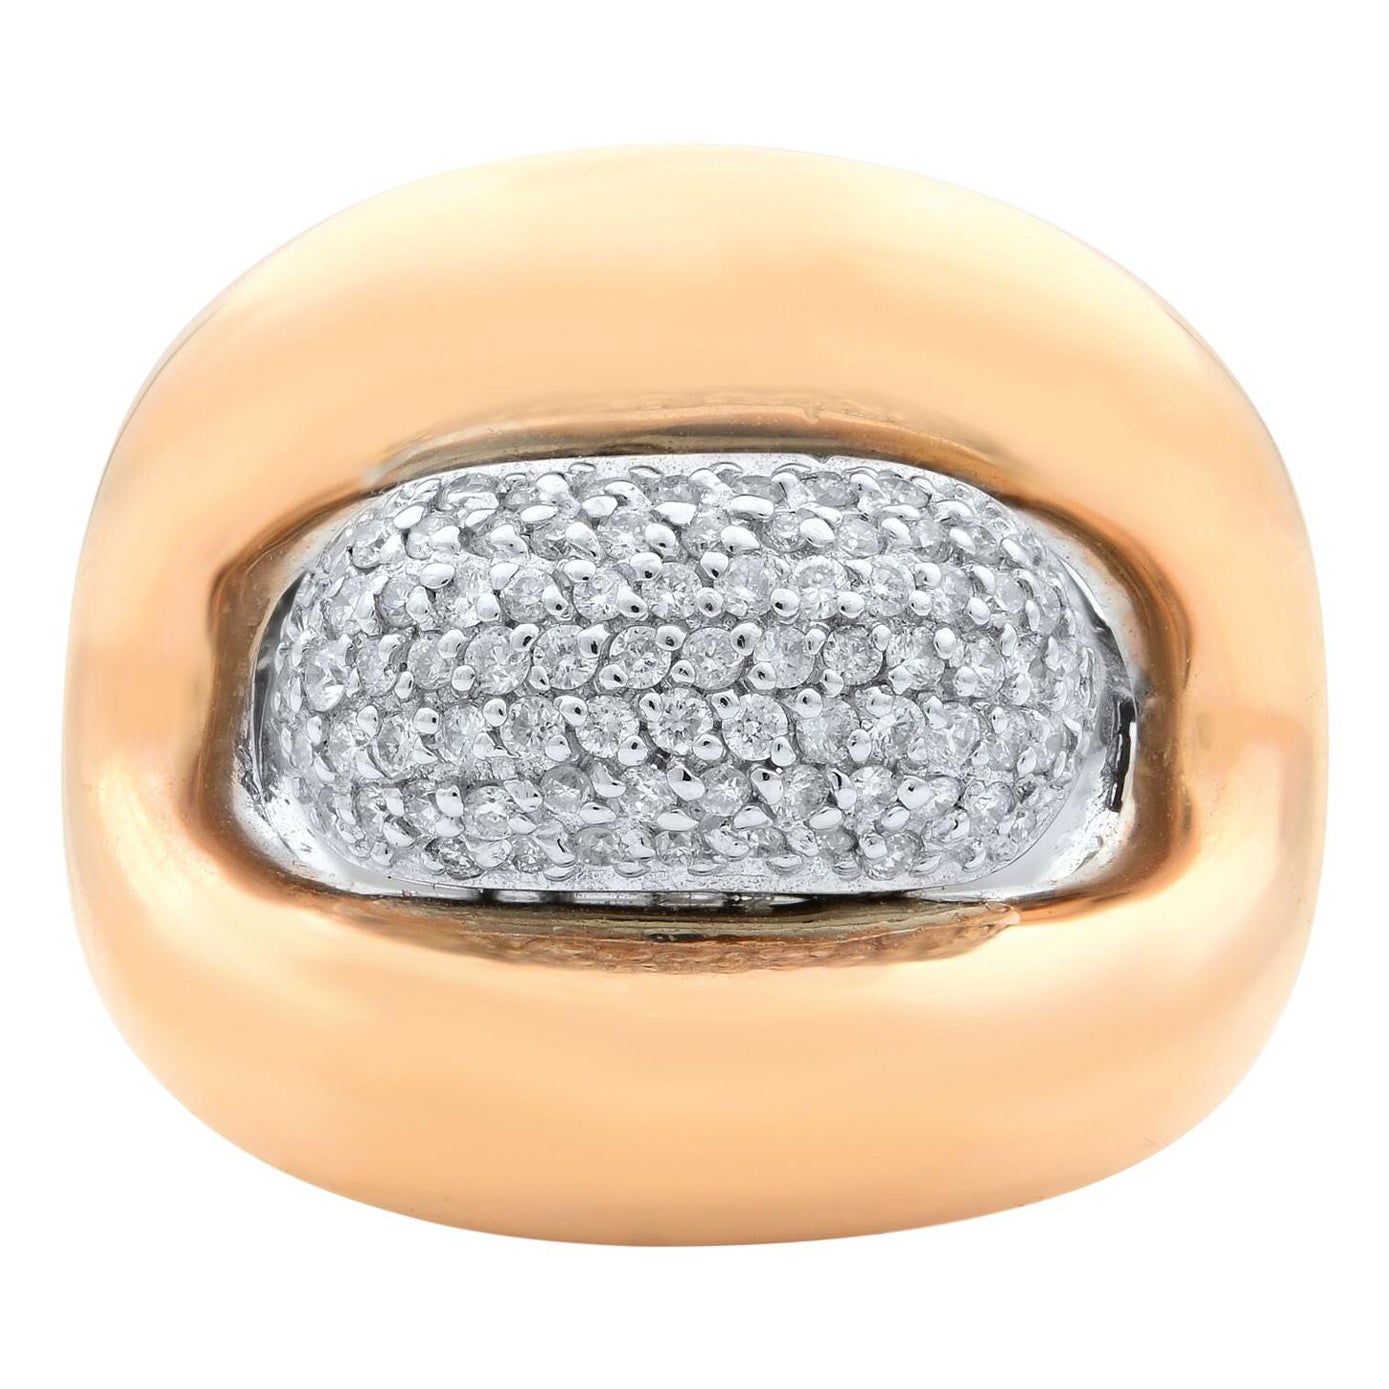 Rachel Koen Diamond Fashion Ring 14K White and Rose Gold 0.35Cttw